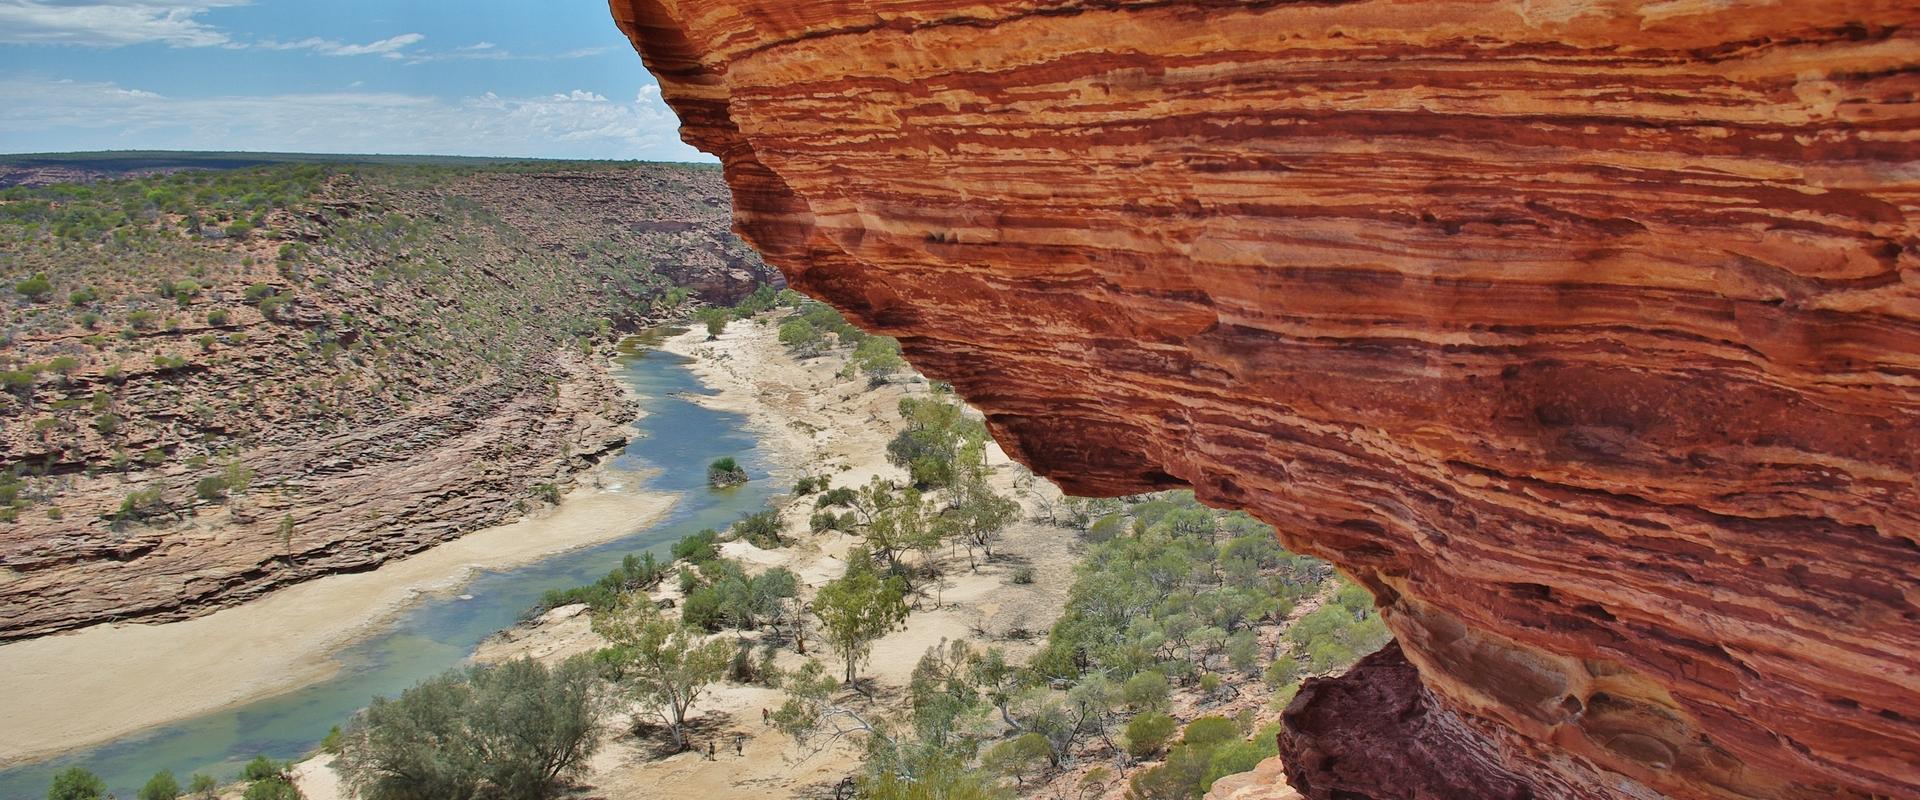 Ferruginous sandstone, Australia